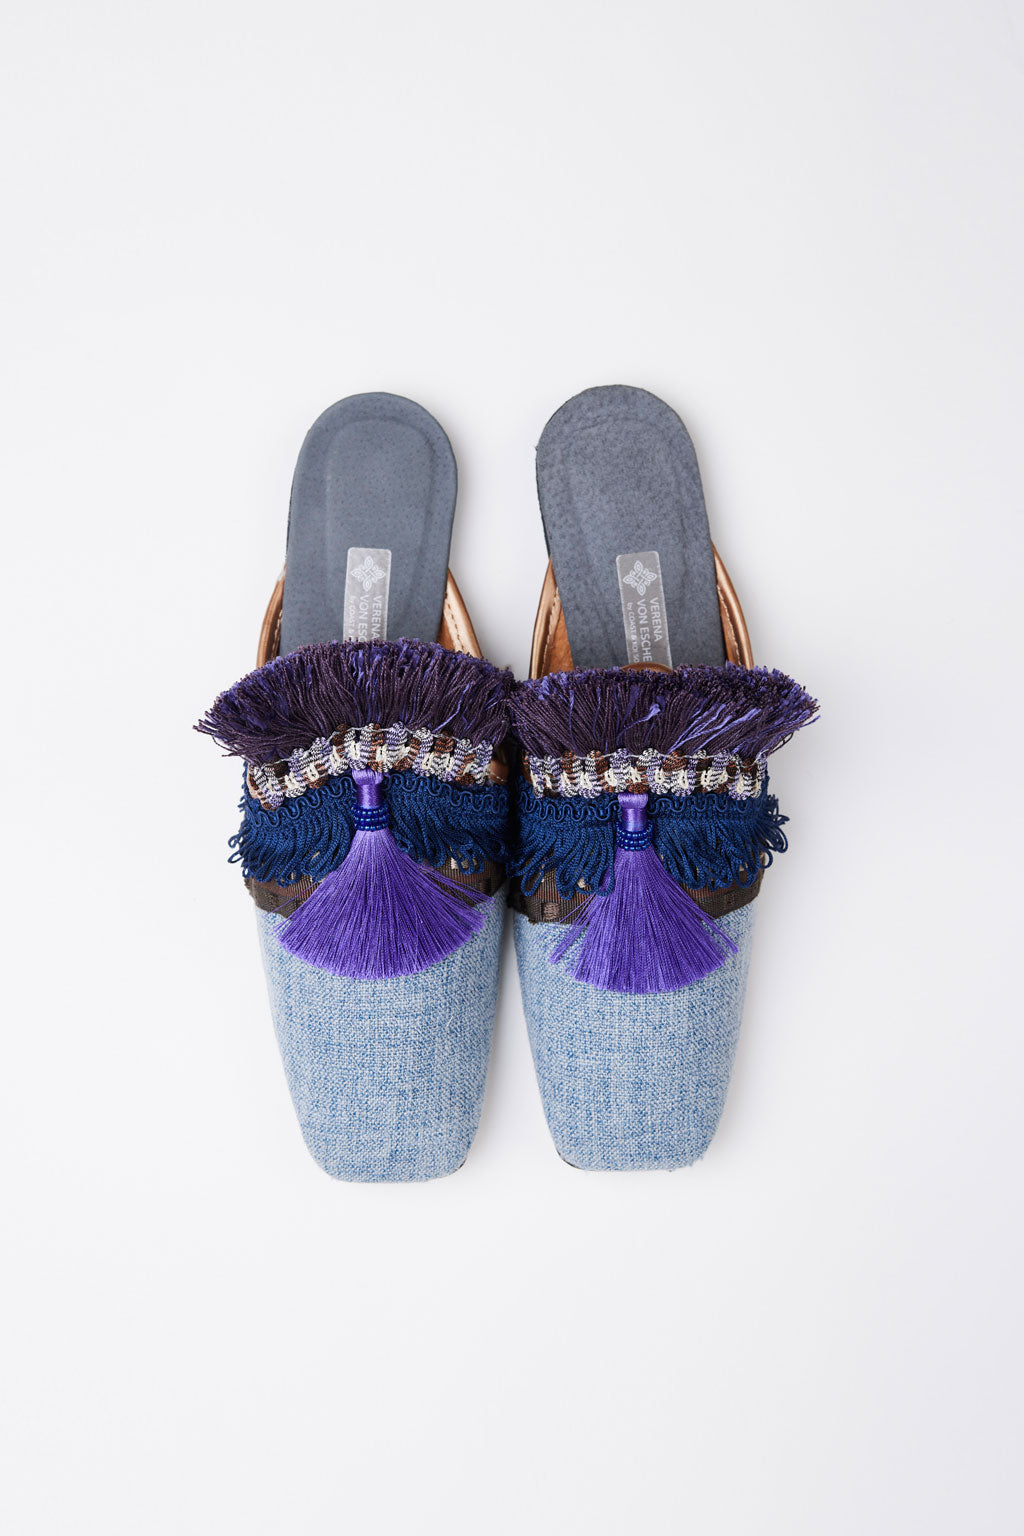 Slippers de luxe handmade Lilane Gr. 40